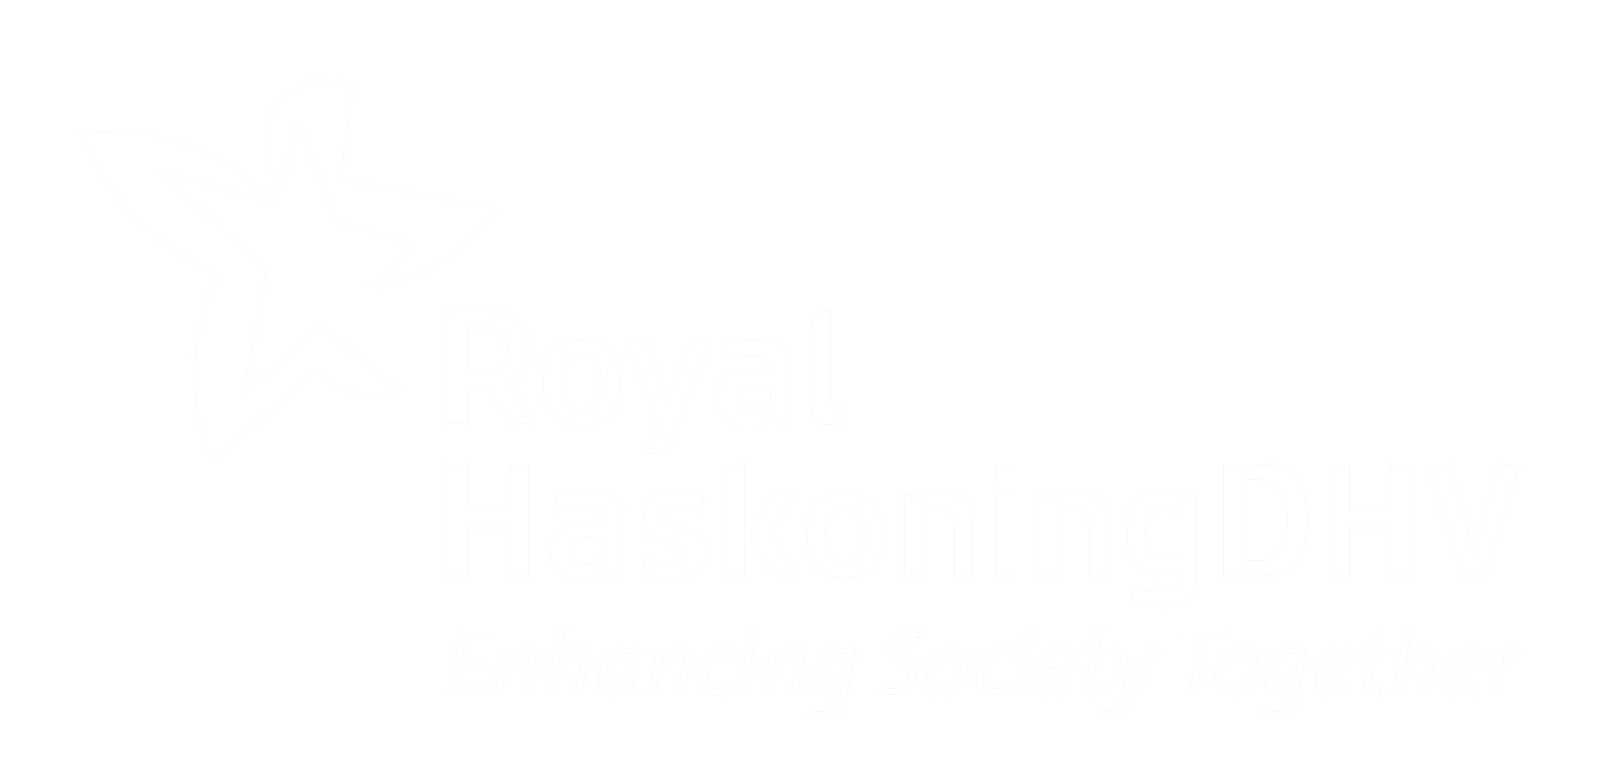 Royal HaskoningDHV Enhancing Society Together